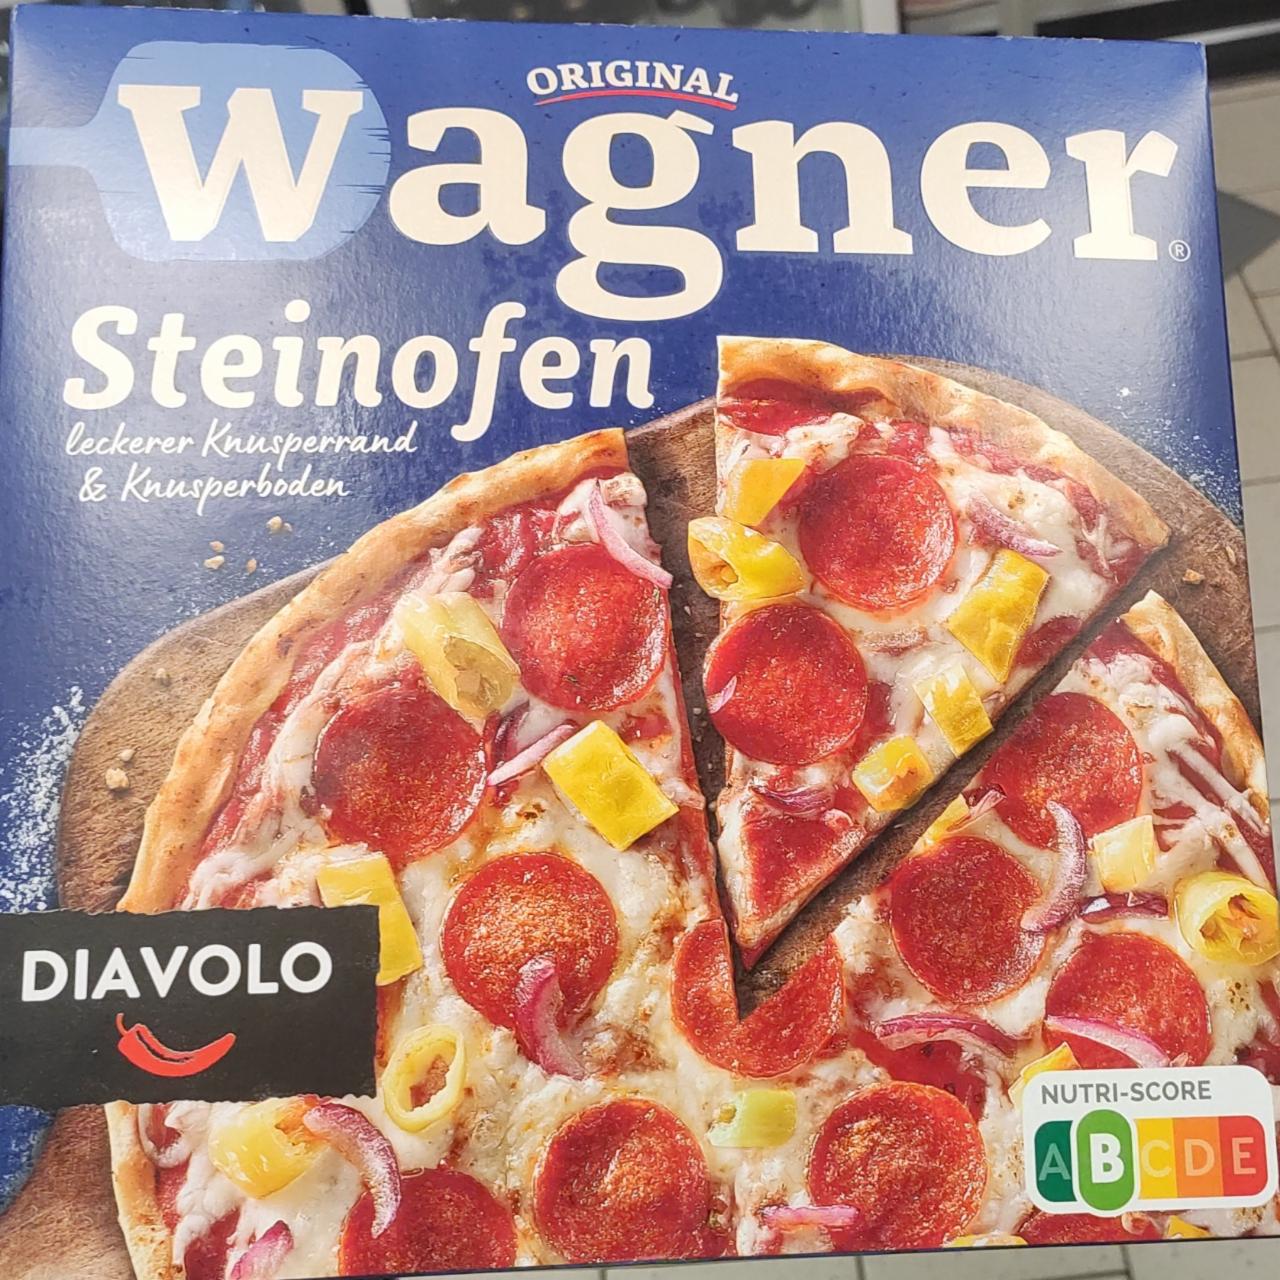 Fotografie - Original Wagner Steinofen Pizza Diavolo